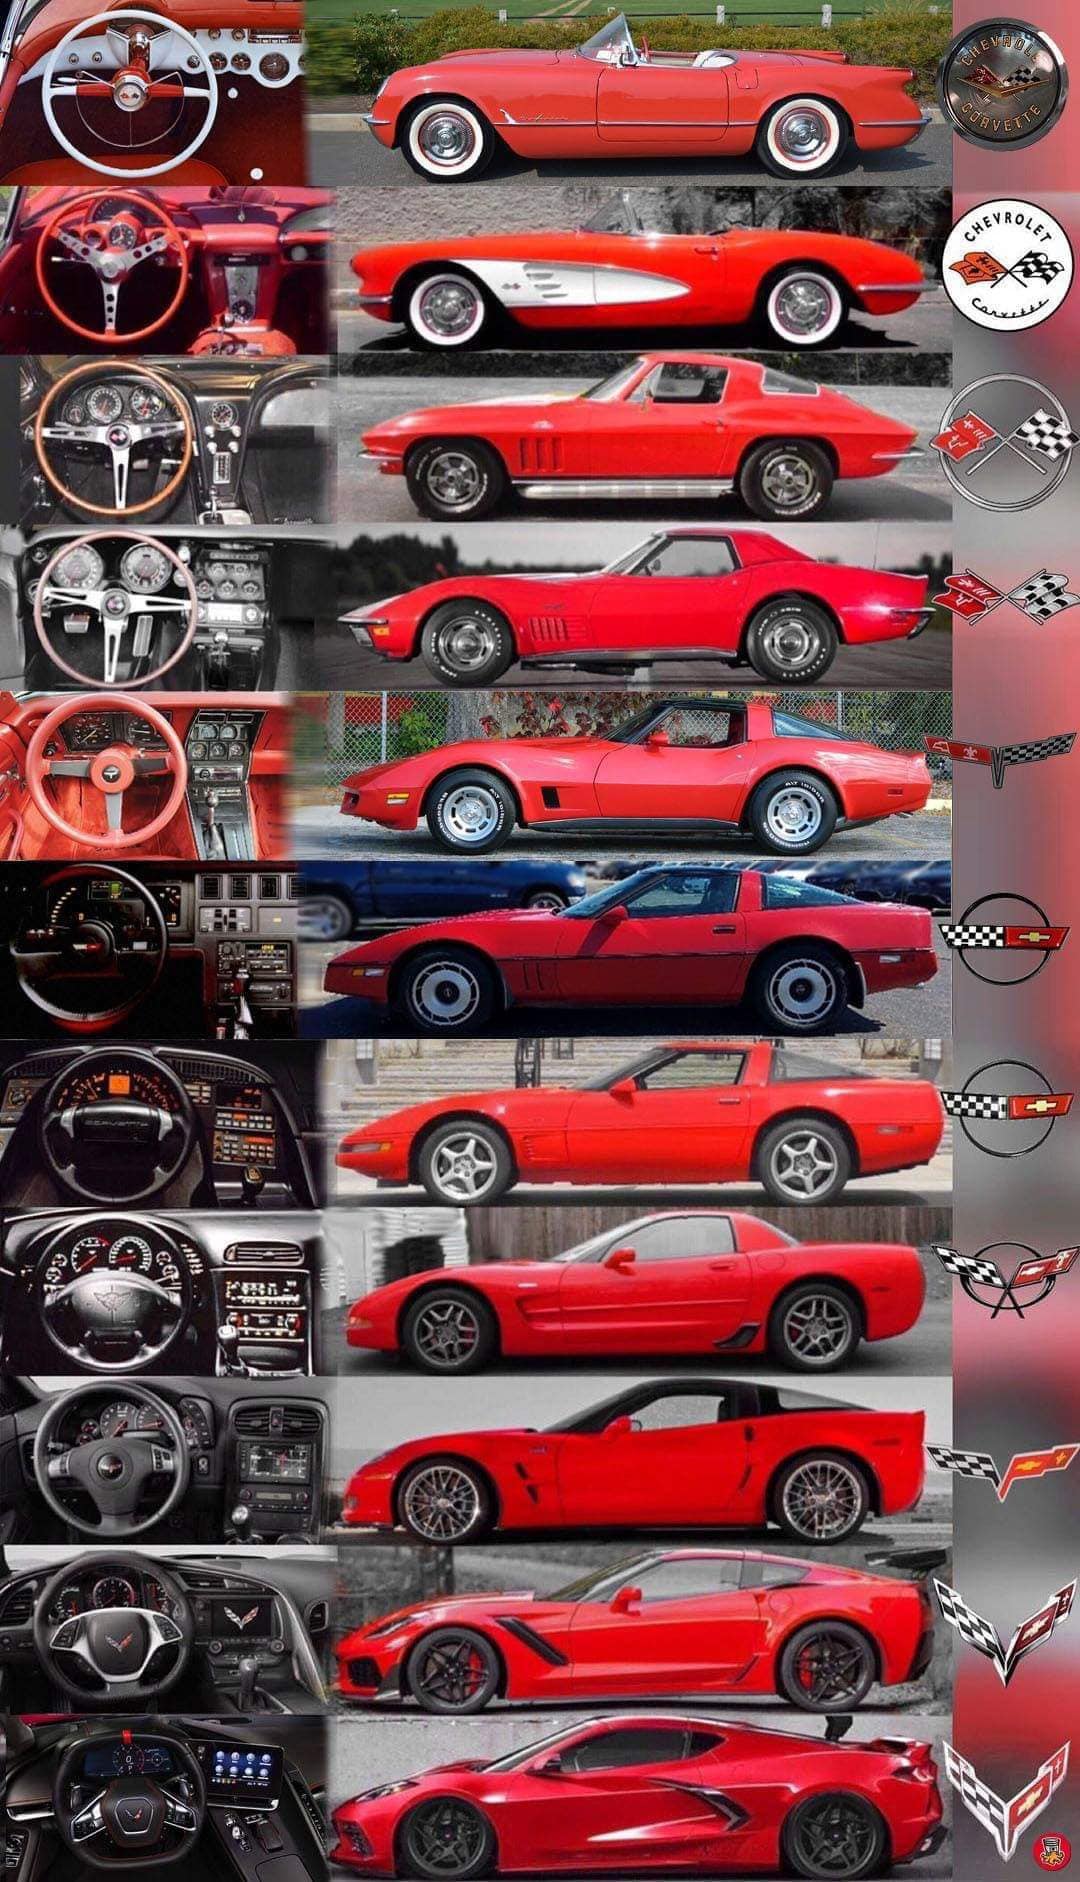 corvette body styles by year